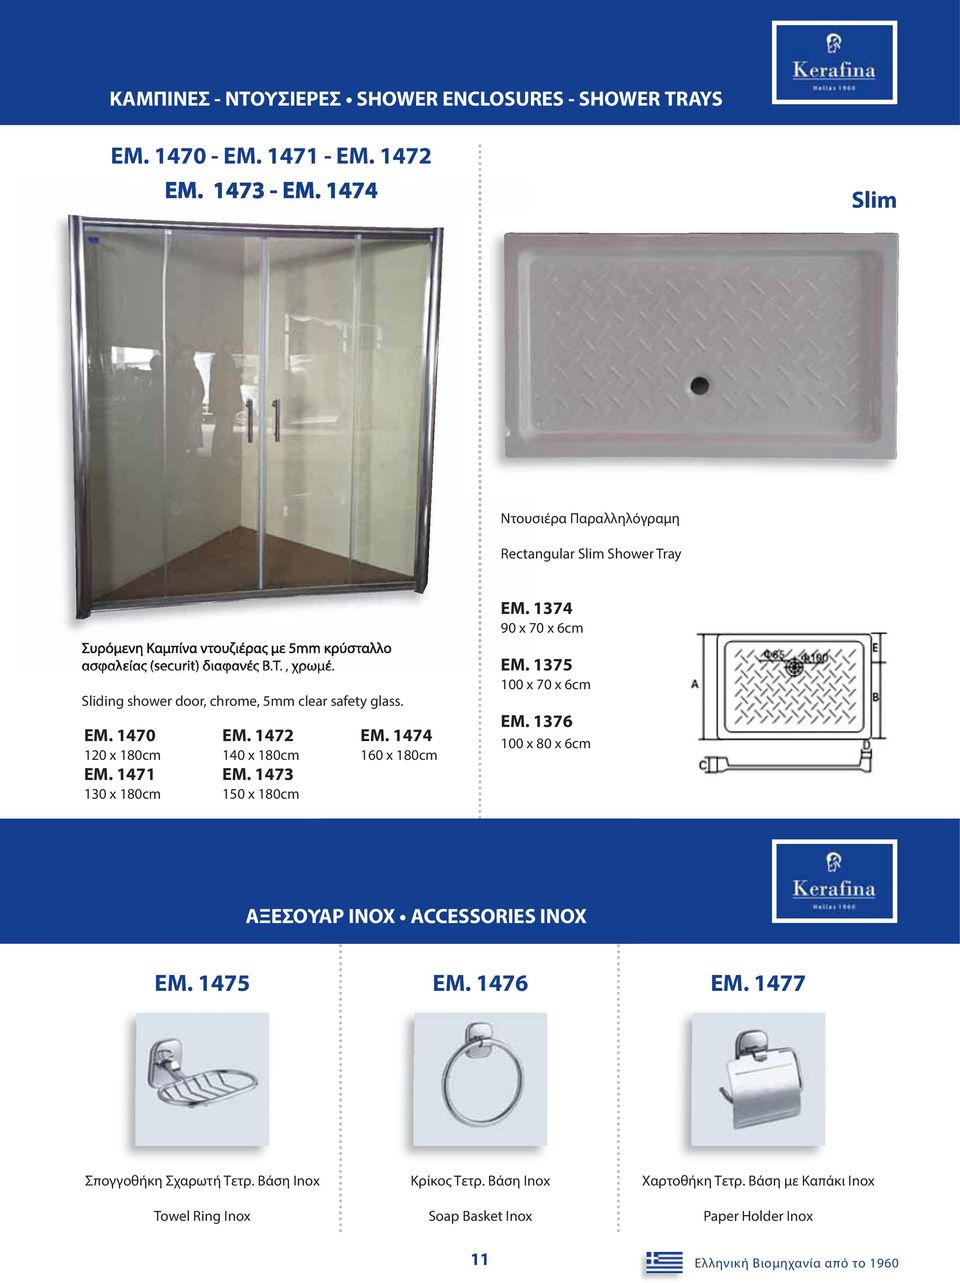 Sliding shower door, chrome, 5mm clear safety glass. EM. 1470 120 x 180cm EM. 1471 130 x 180cm EM. 1472 140 x 180cm EM. 1473 150 x 180cm EM. 1474 160 x 180cm EM.